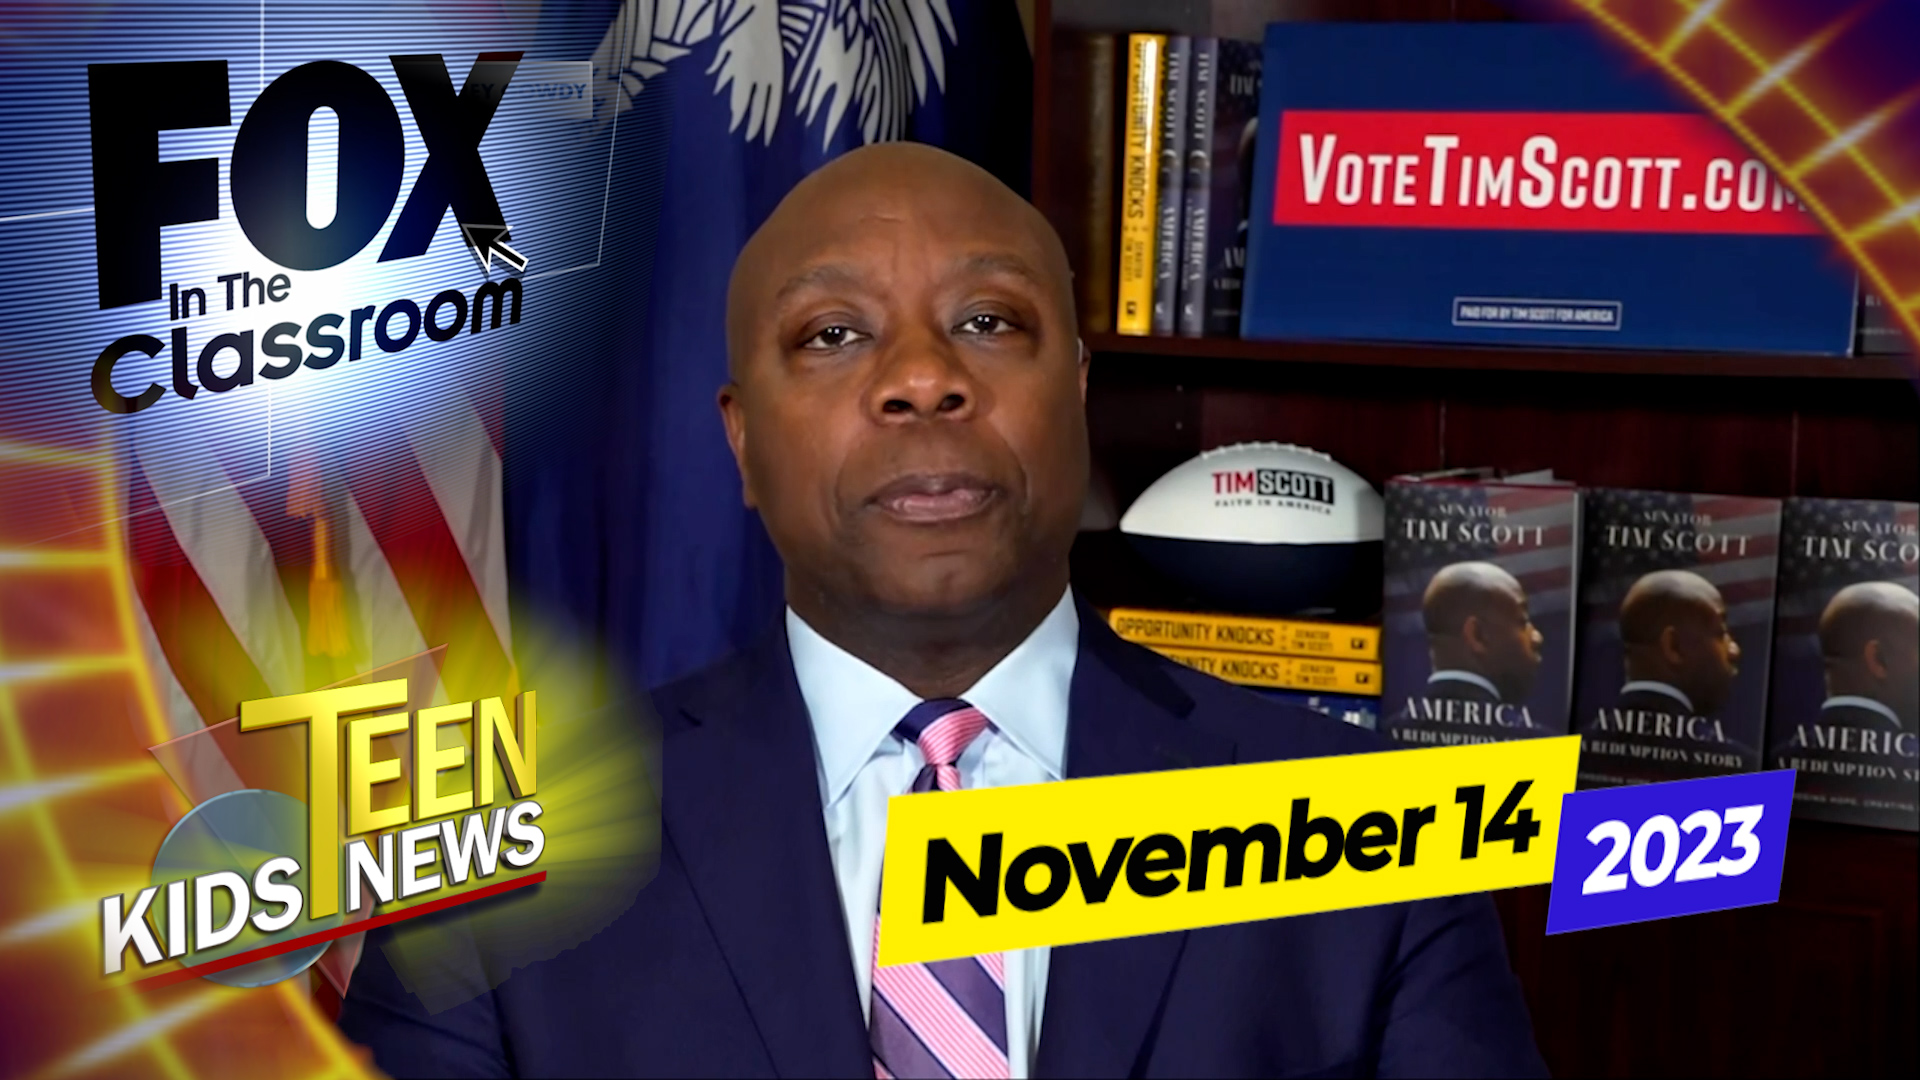 FOX News in the Classroom: Nov 14, 2023 - Teen Kids News